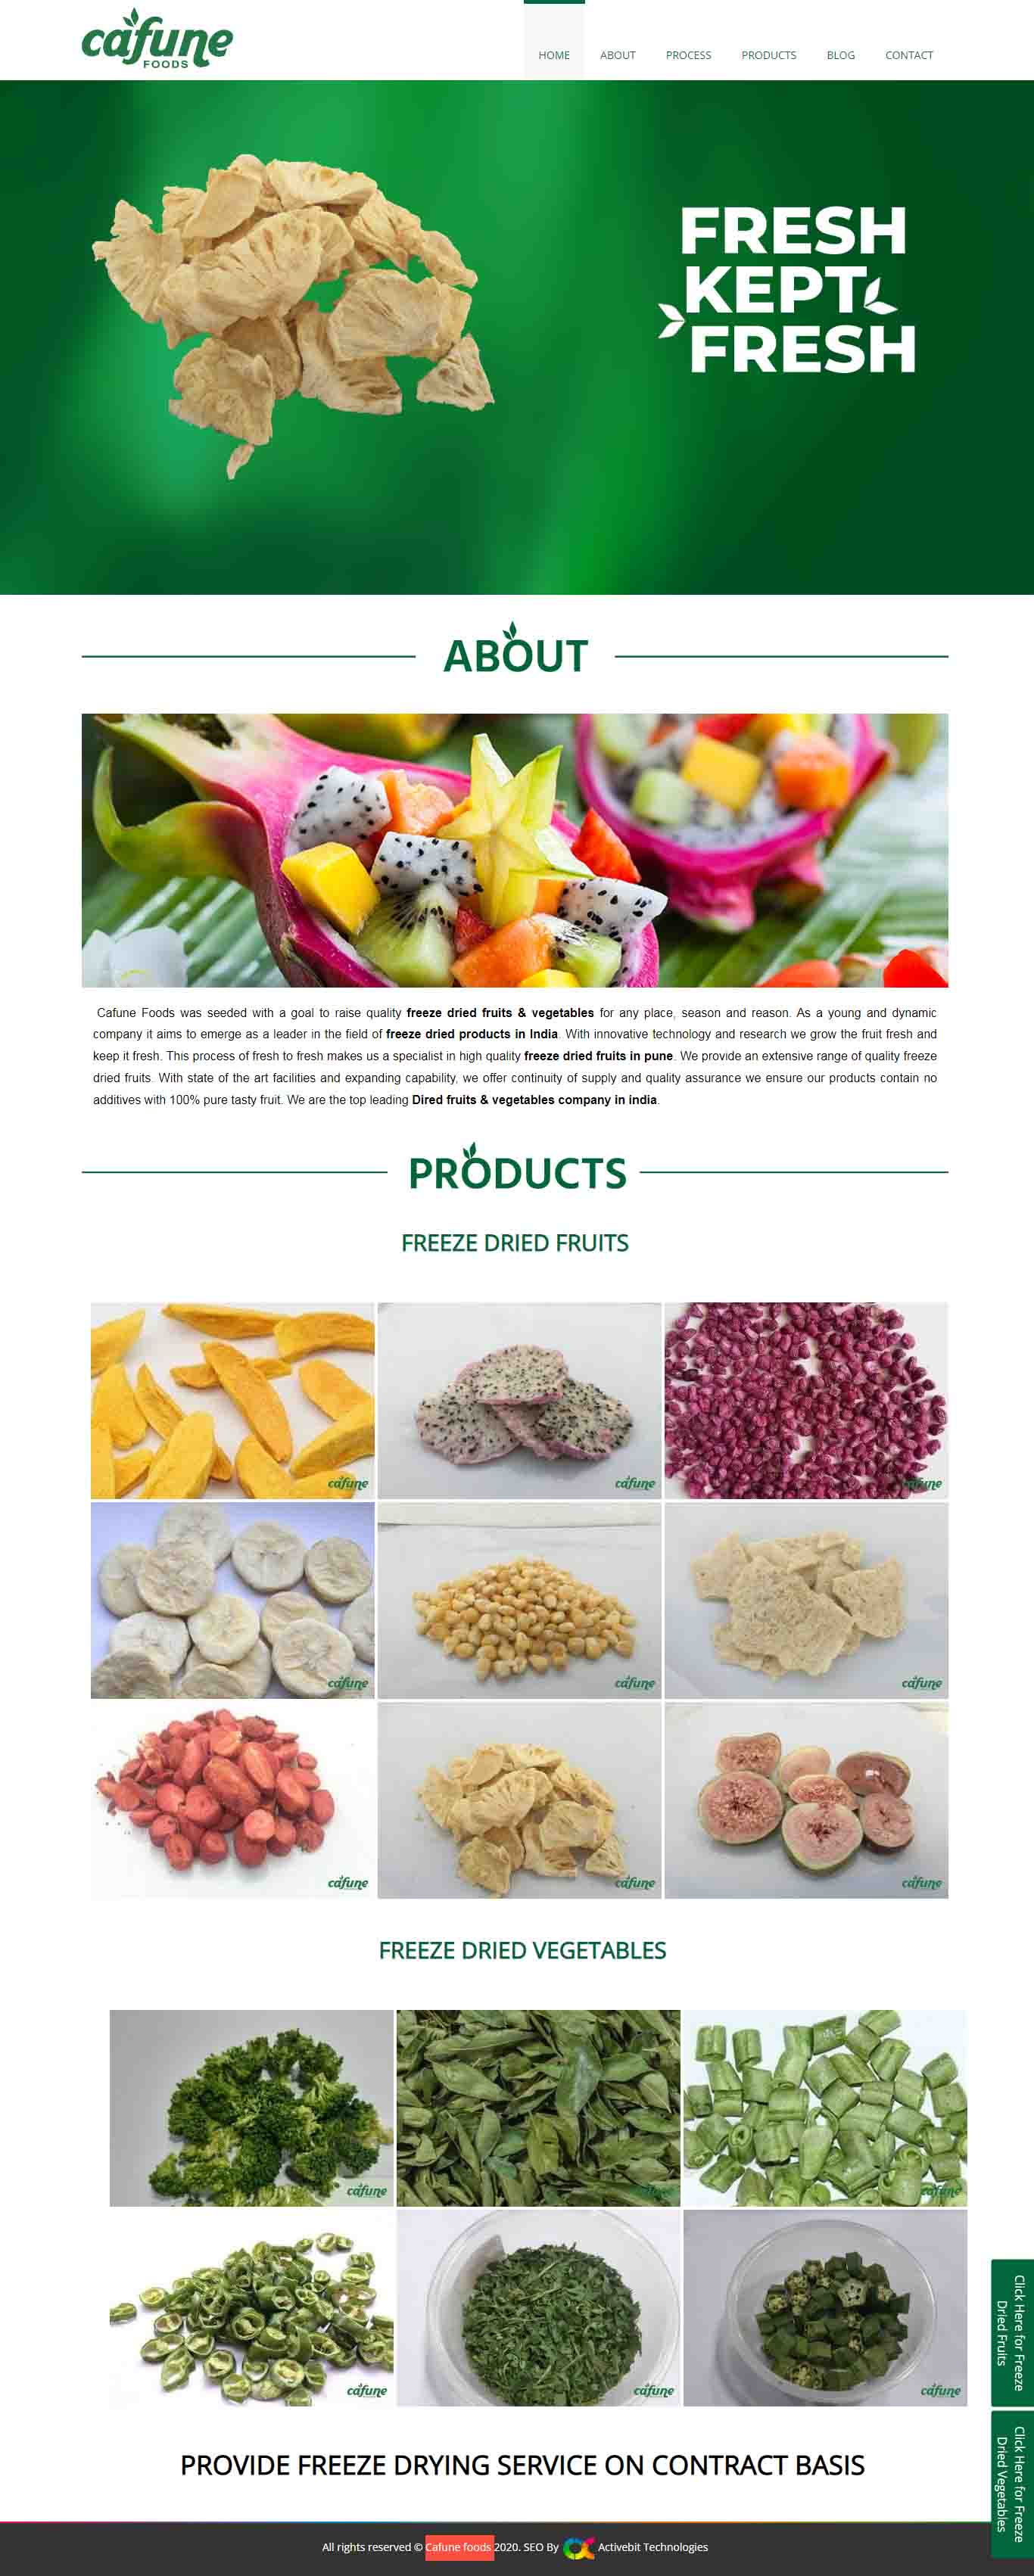 Cafune foods  web design & SEO services